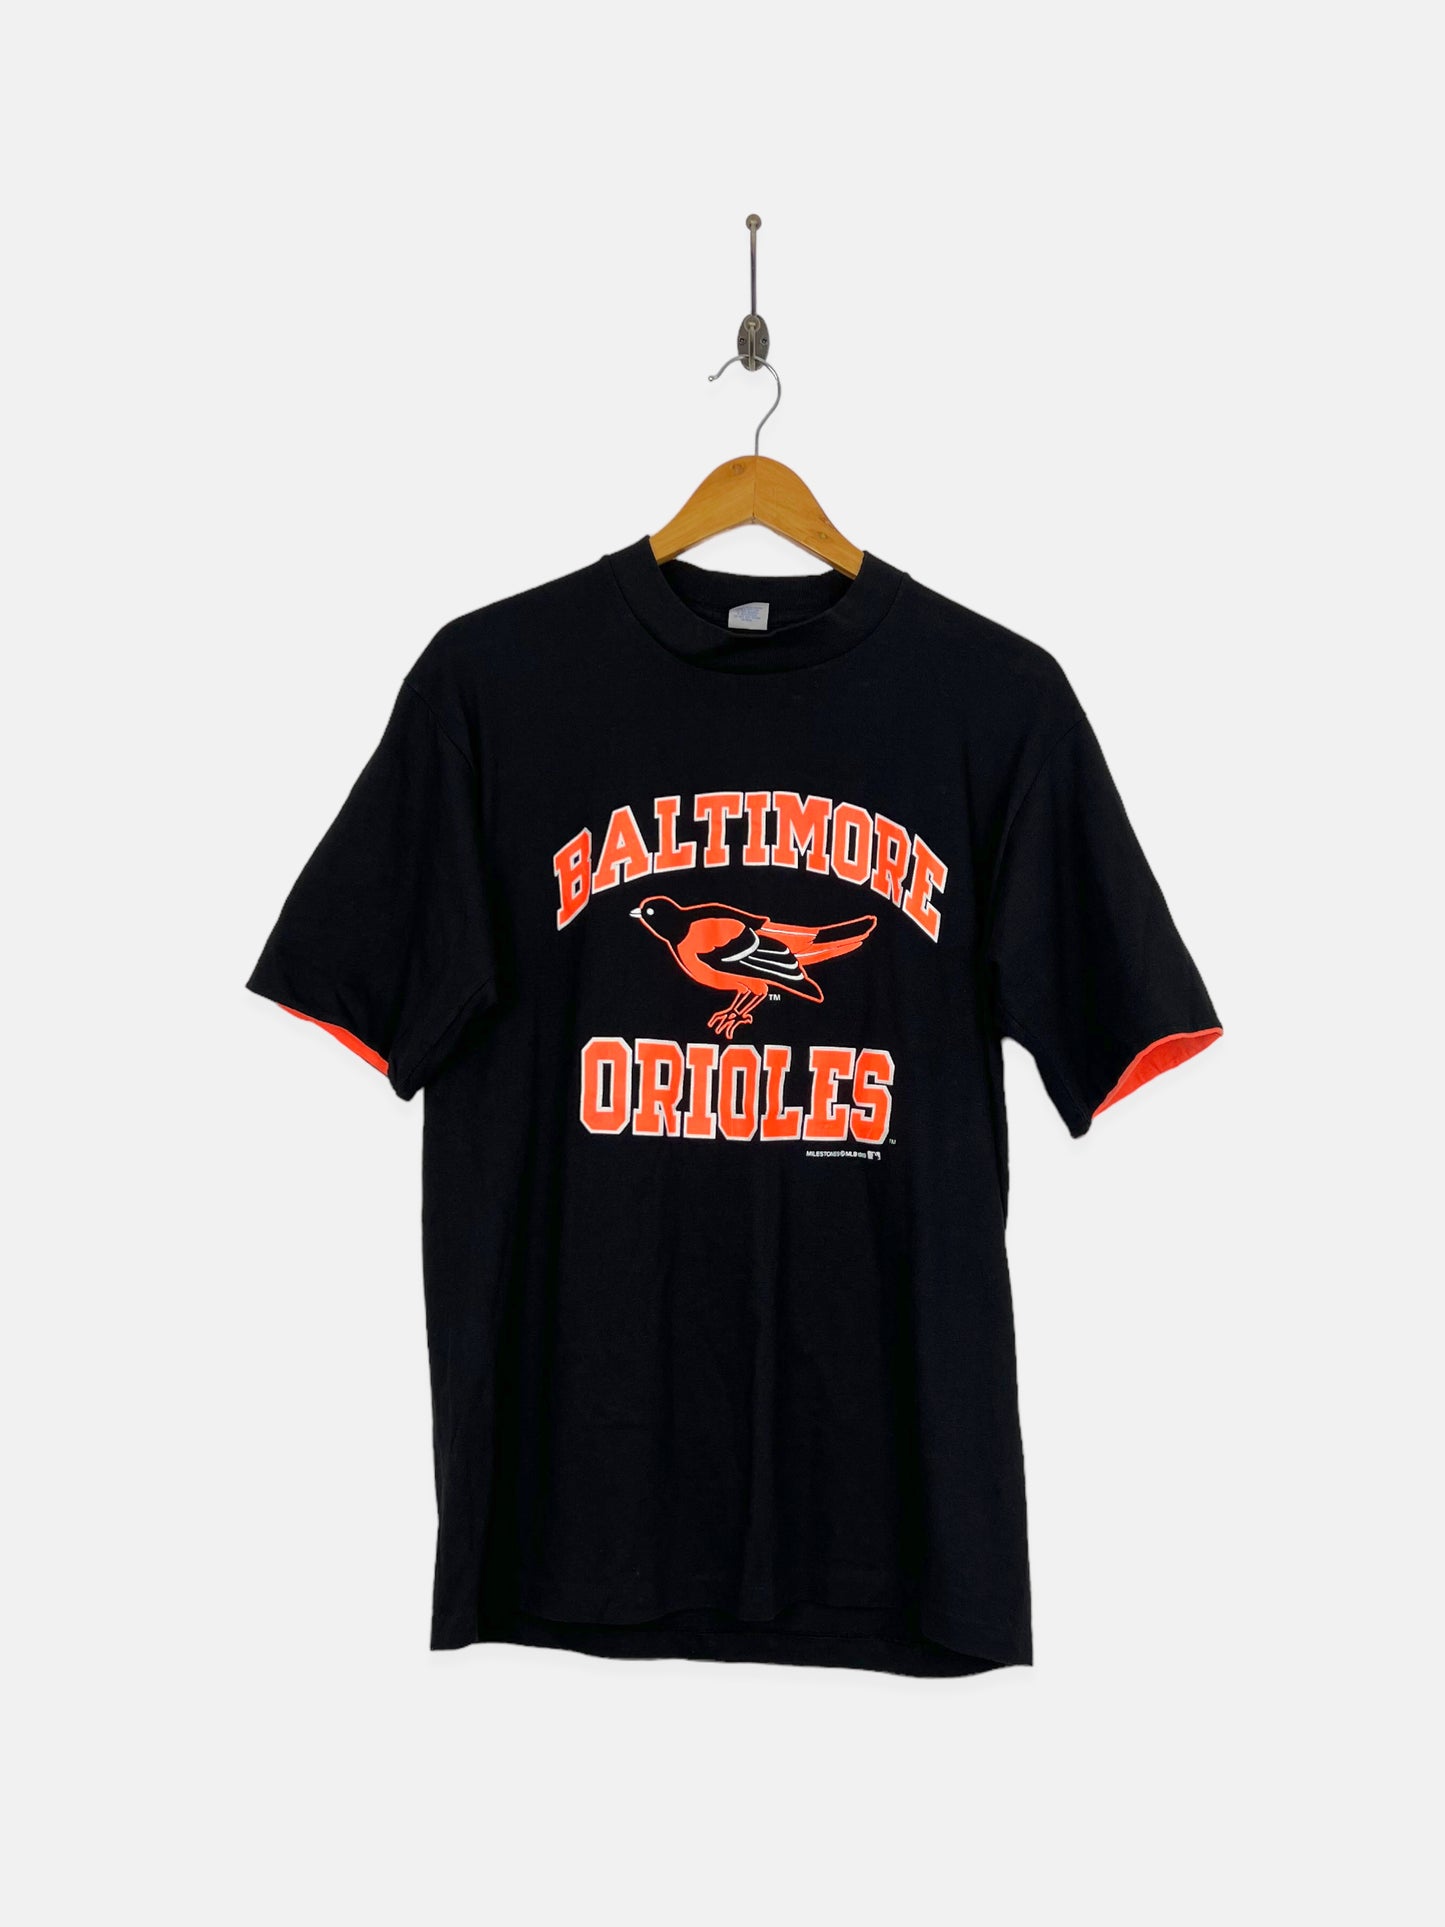 1989 Baltimore Orioles MLB USA Made Vintage T-Shirt Size 8-10